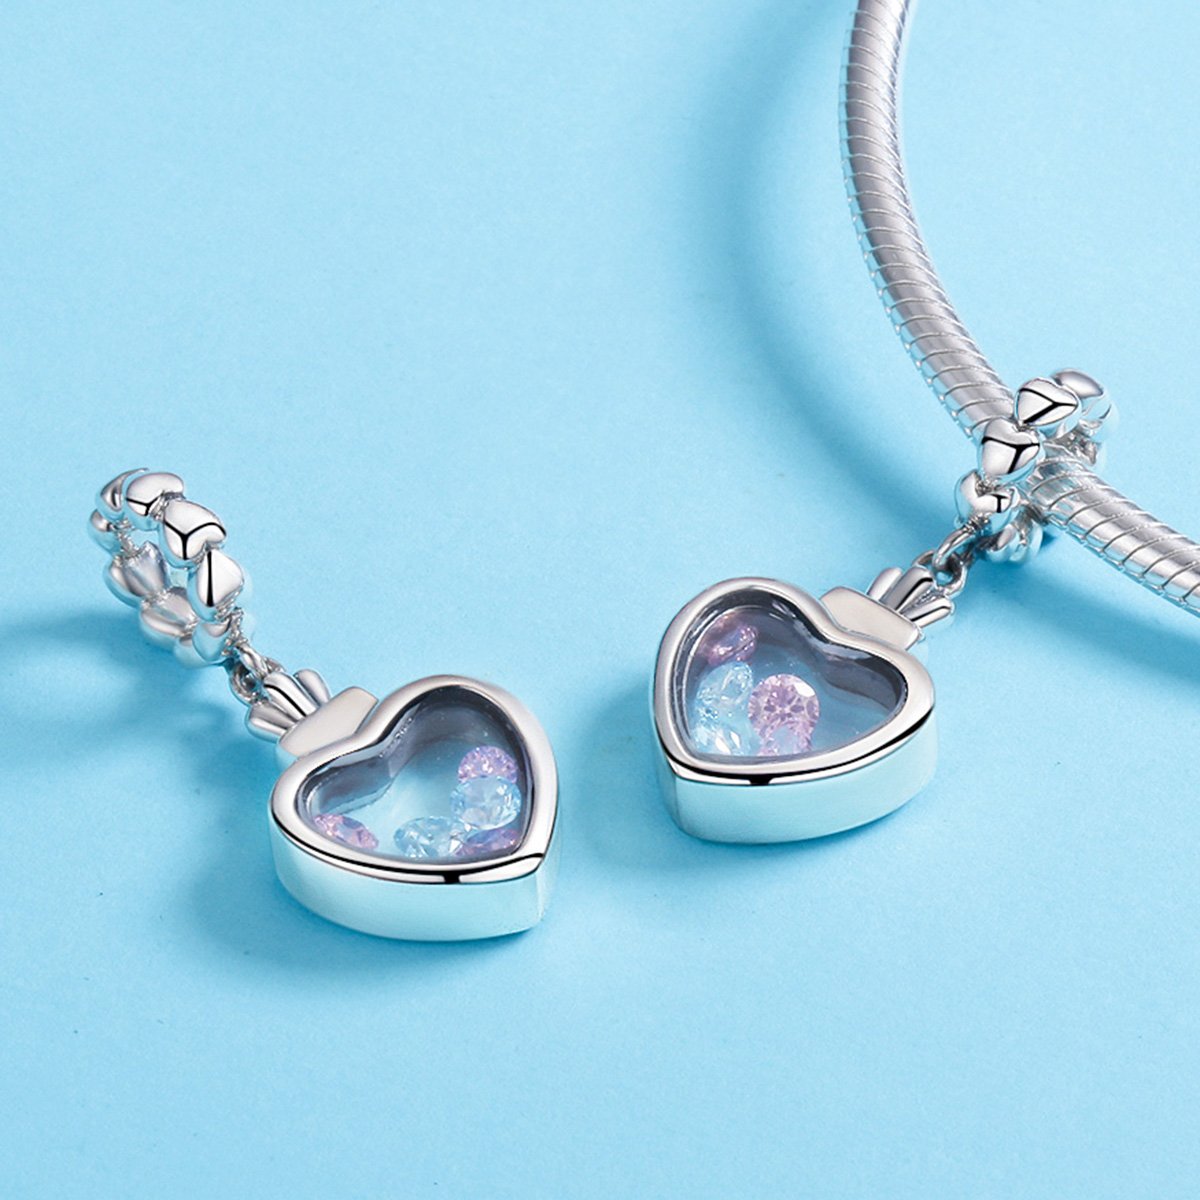 Sterling 925 silver charm the pretty heart bead pendant fits Pandora charm and European charm bracelet Xaxe.com